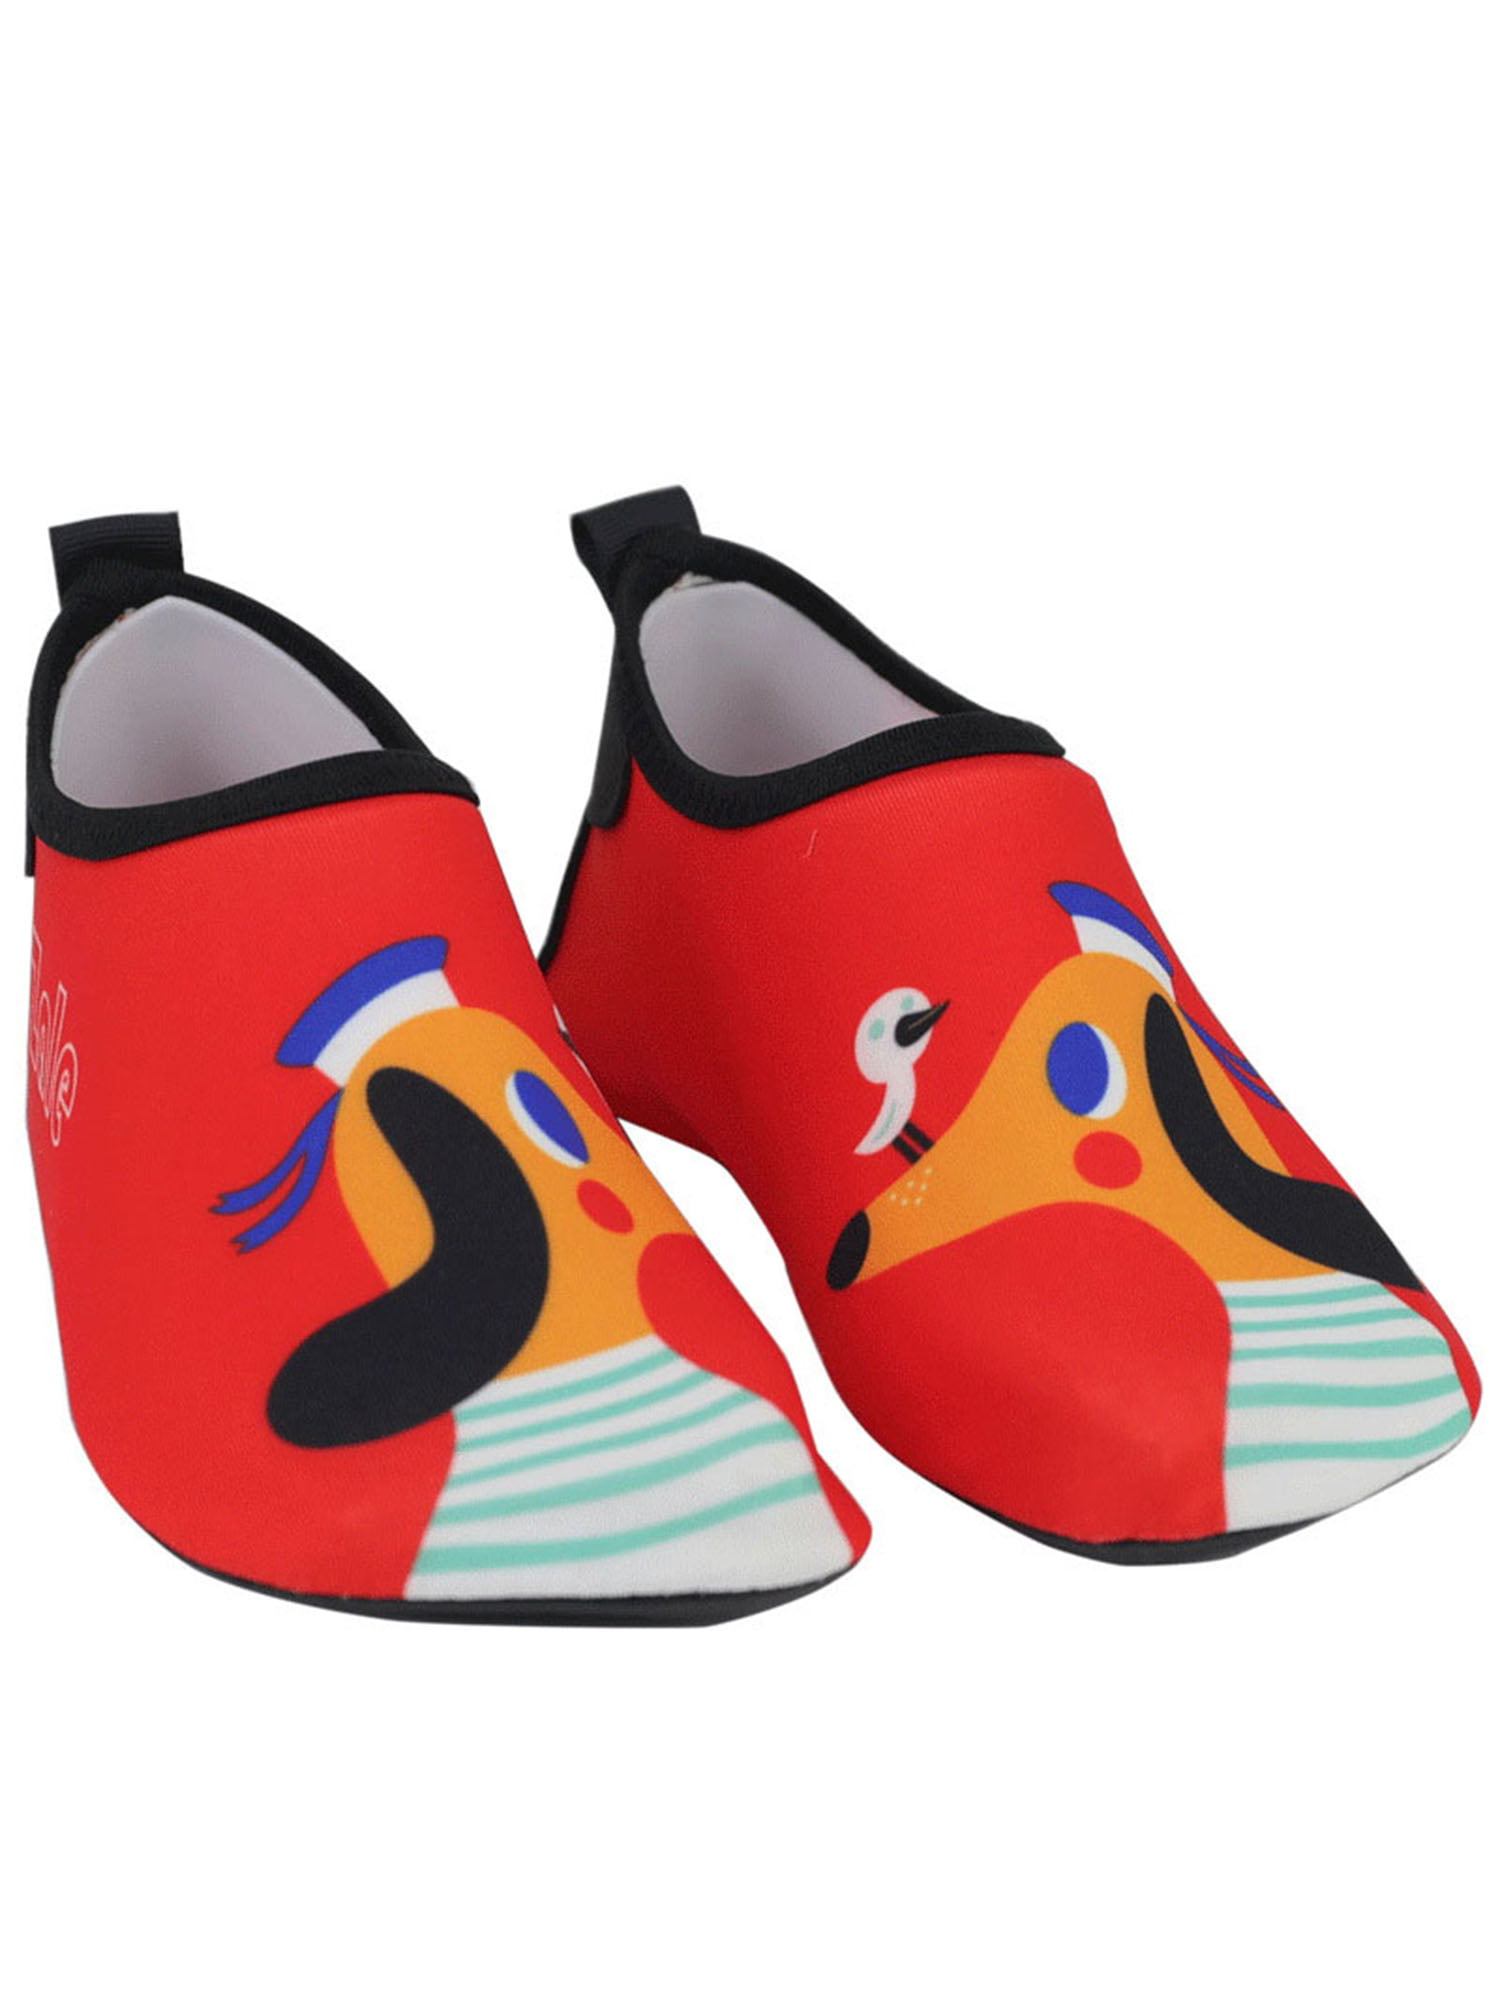 Unisex Aqua Shoes Mens Womens Kids Water Socks Slip On Sea Wet Beach Swim Surf T 